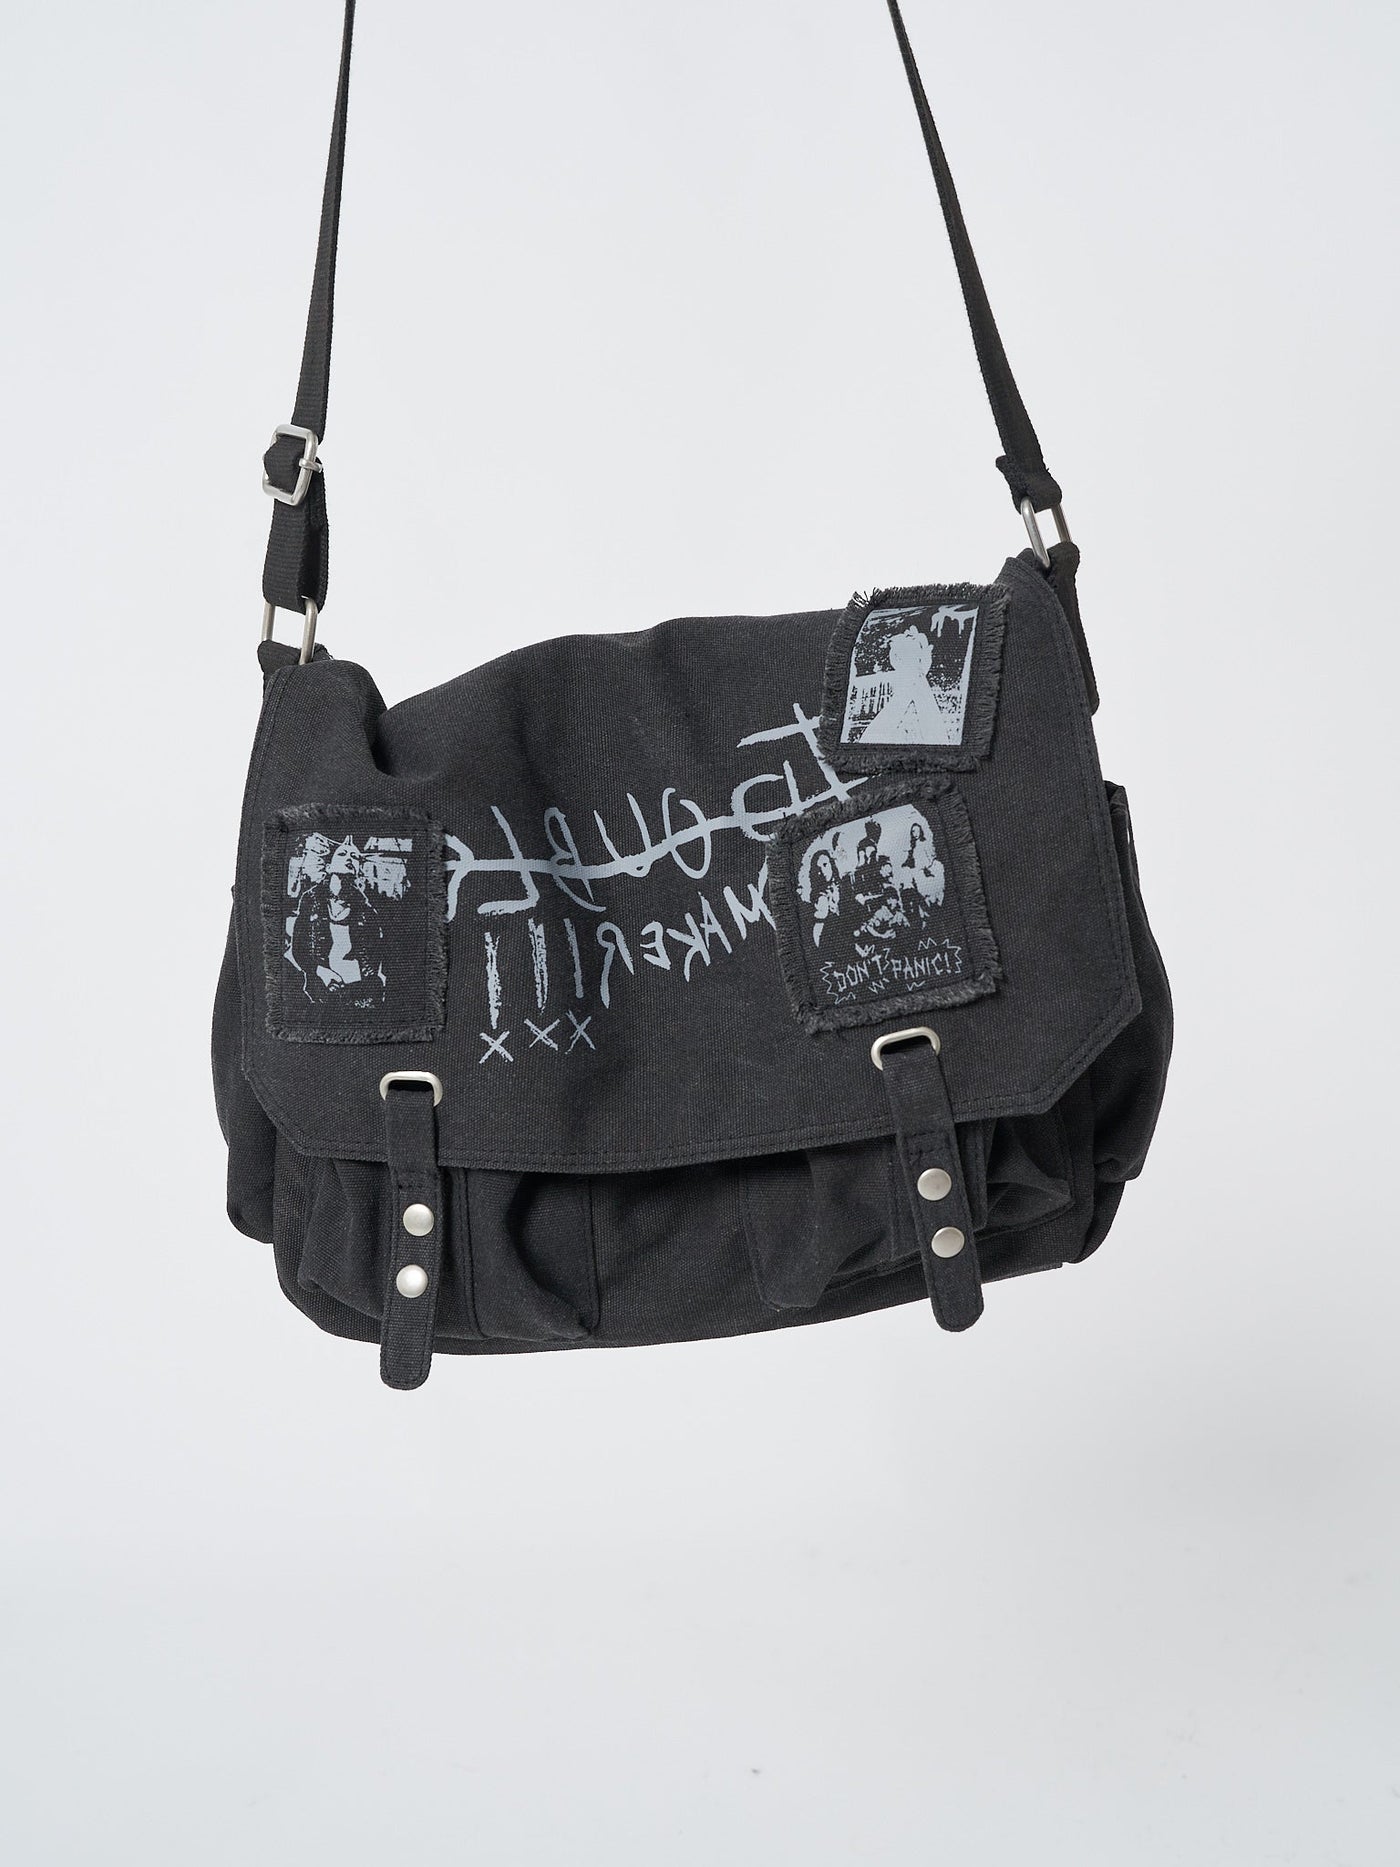 Troublemaker Black Canvas Messenger Bag - Minga  US